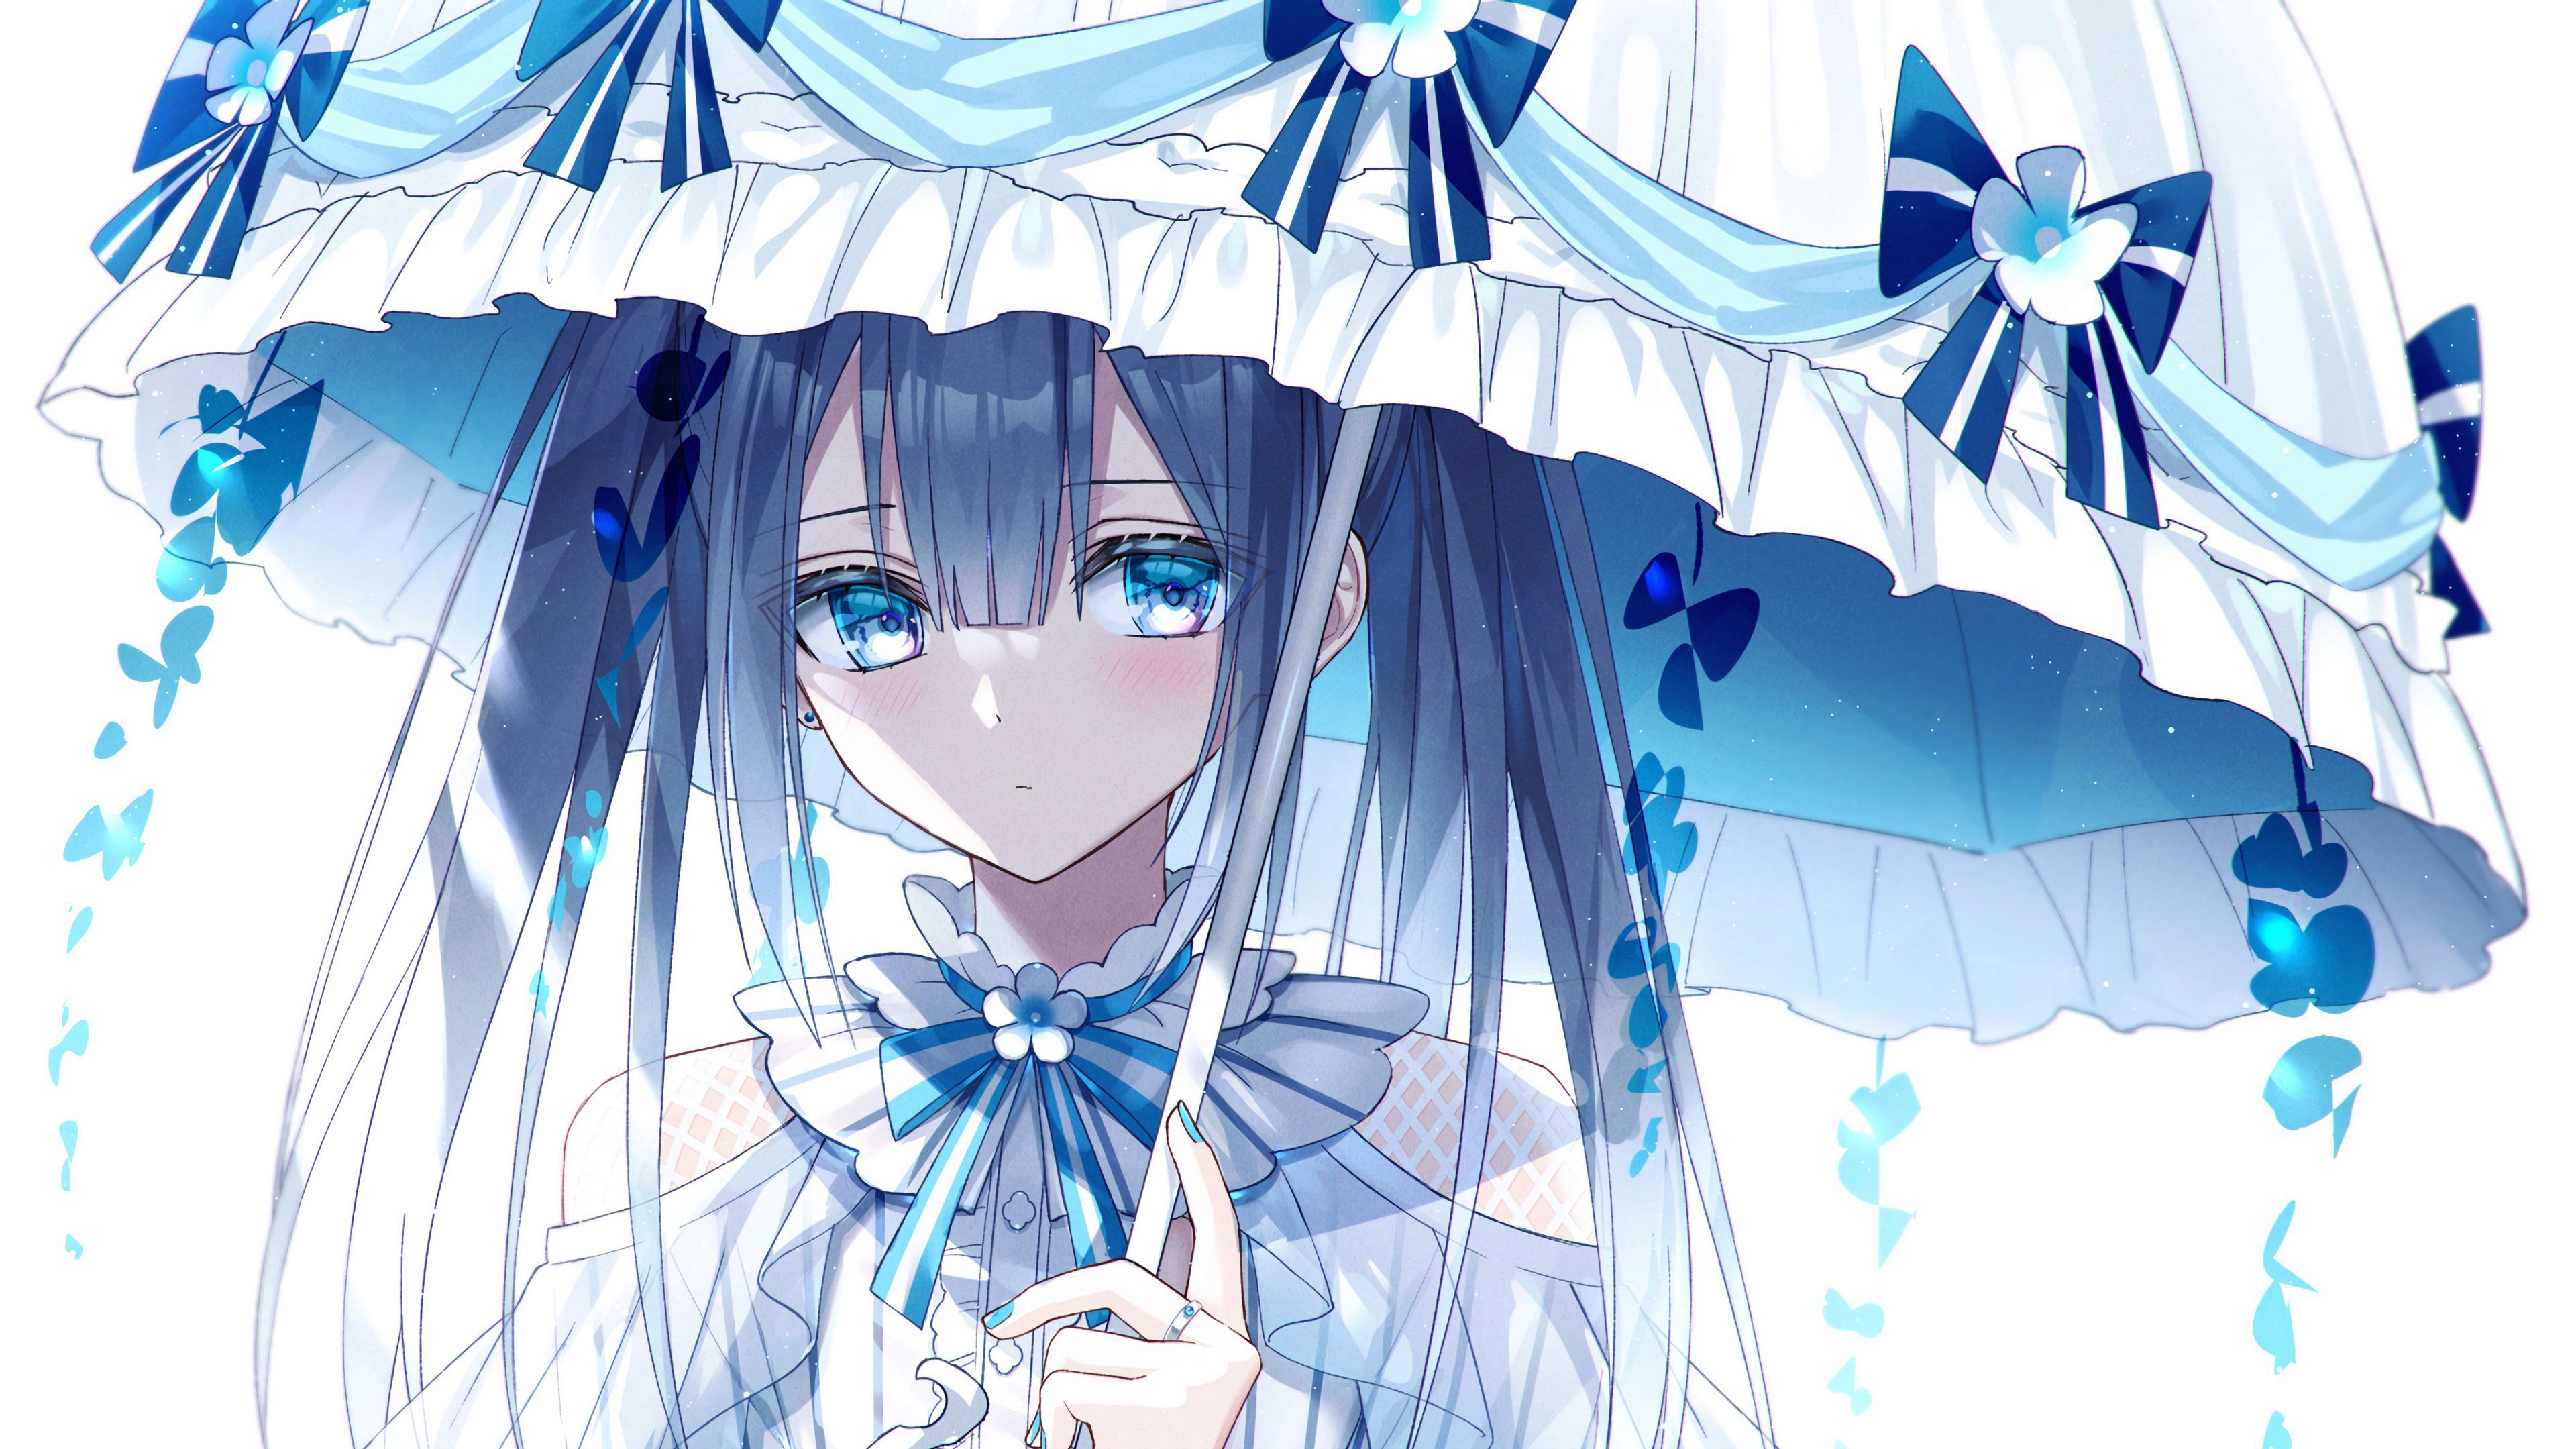 A cute anime girl with blue eyes and blue hair, holding a blue umbrella. - Blue anime